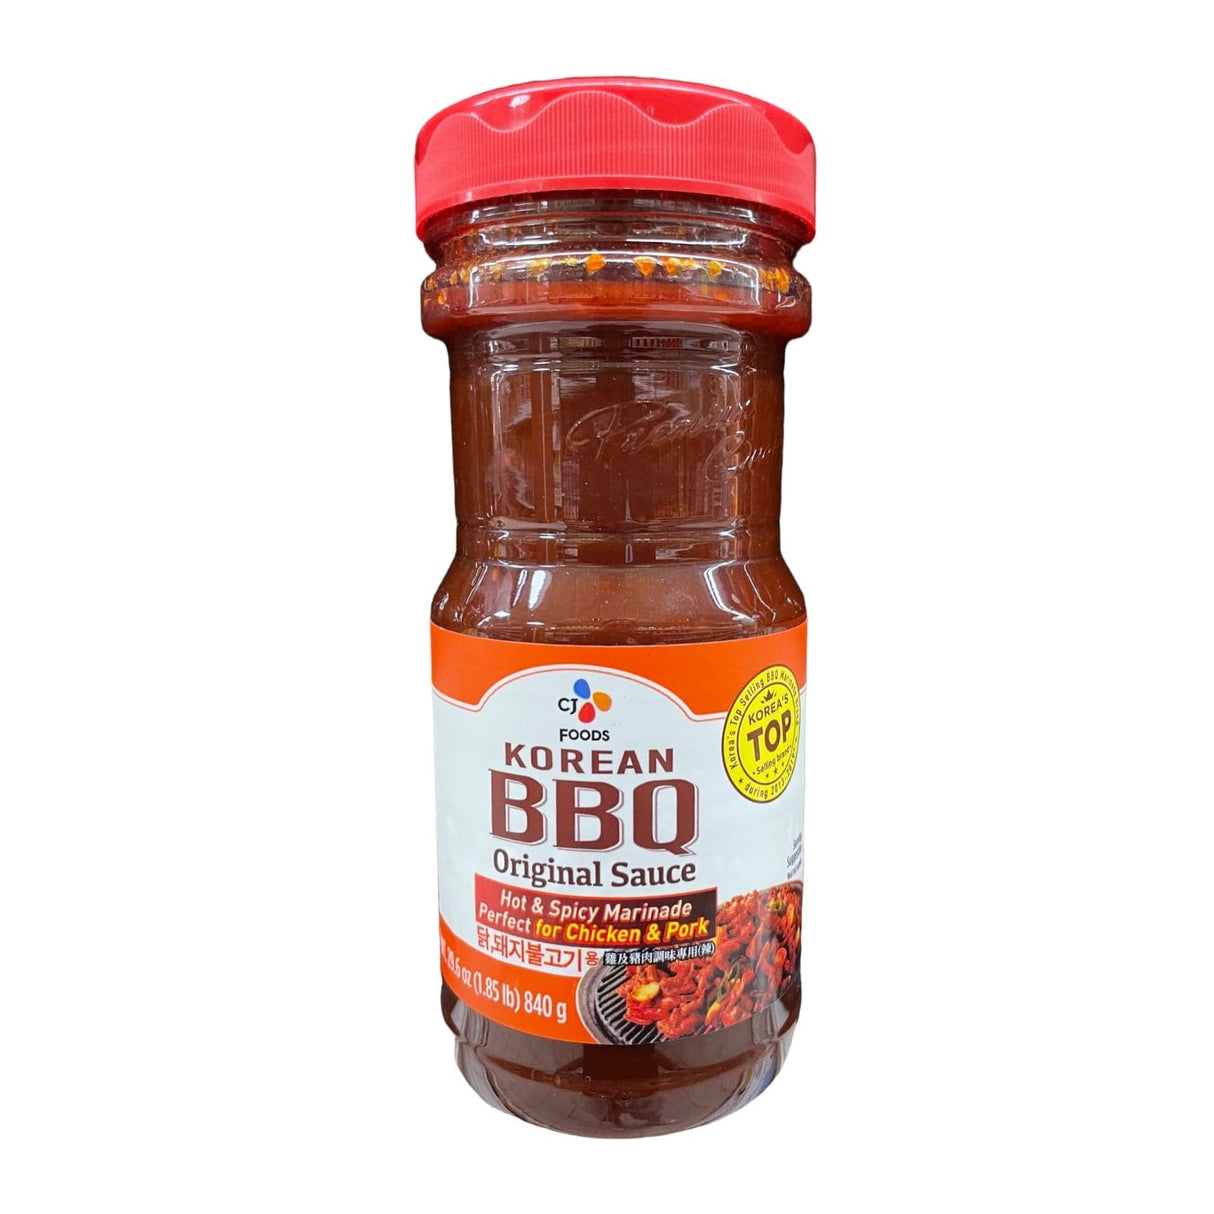 CJ Foods Korean BBQ Sauce Hot & Spicy Marinade Perfect for Chicken & Pork